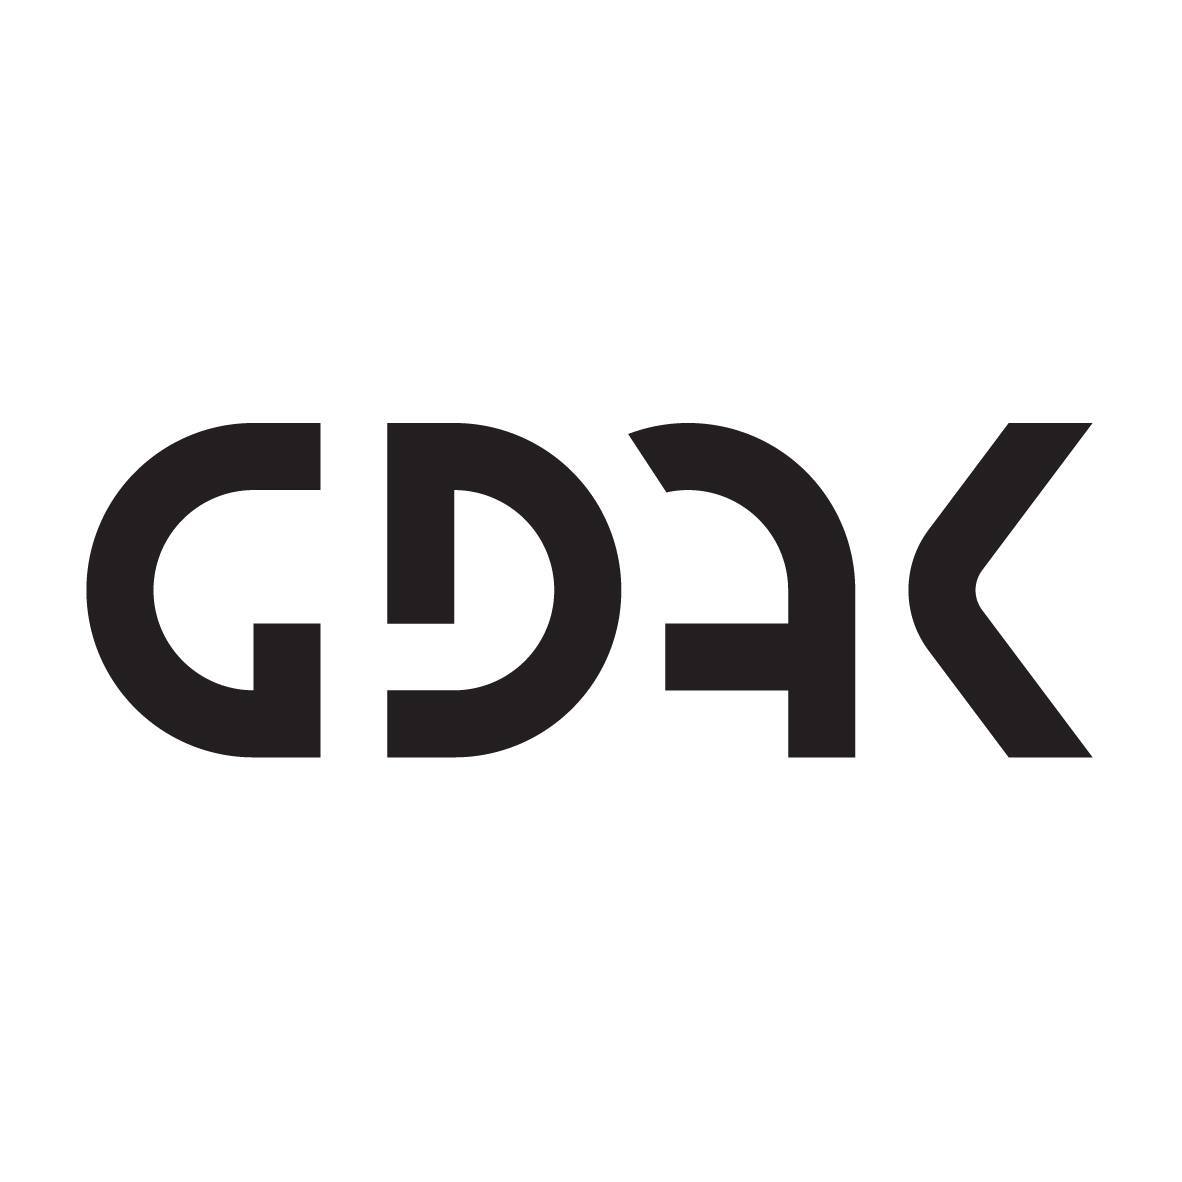 Gdak Studio